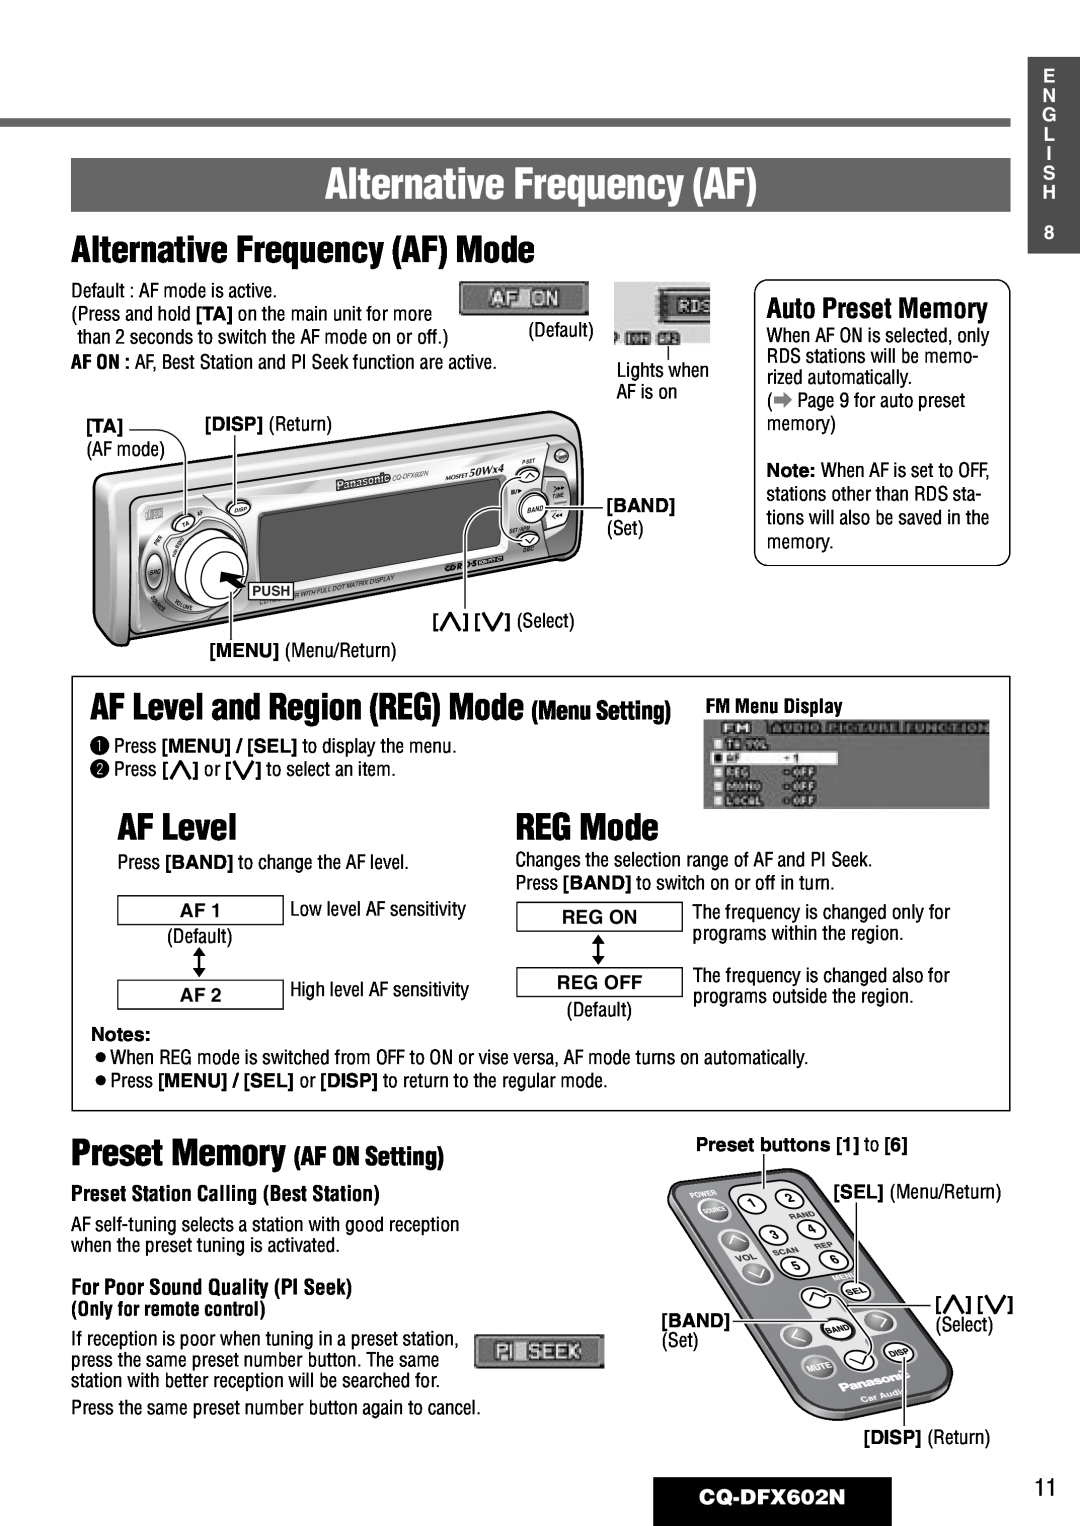 Panasonic manual Alternative Frequency AF Mode, AF Level and Region REG Mode Menu Setting, CQ-DFX602N11 